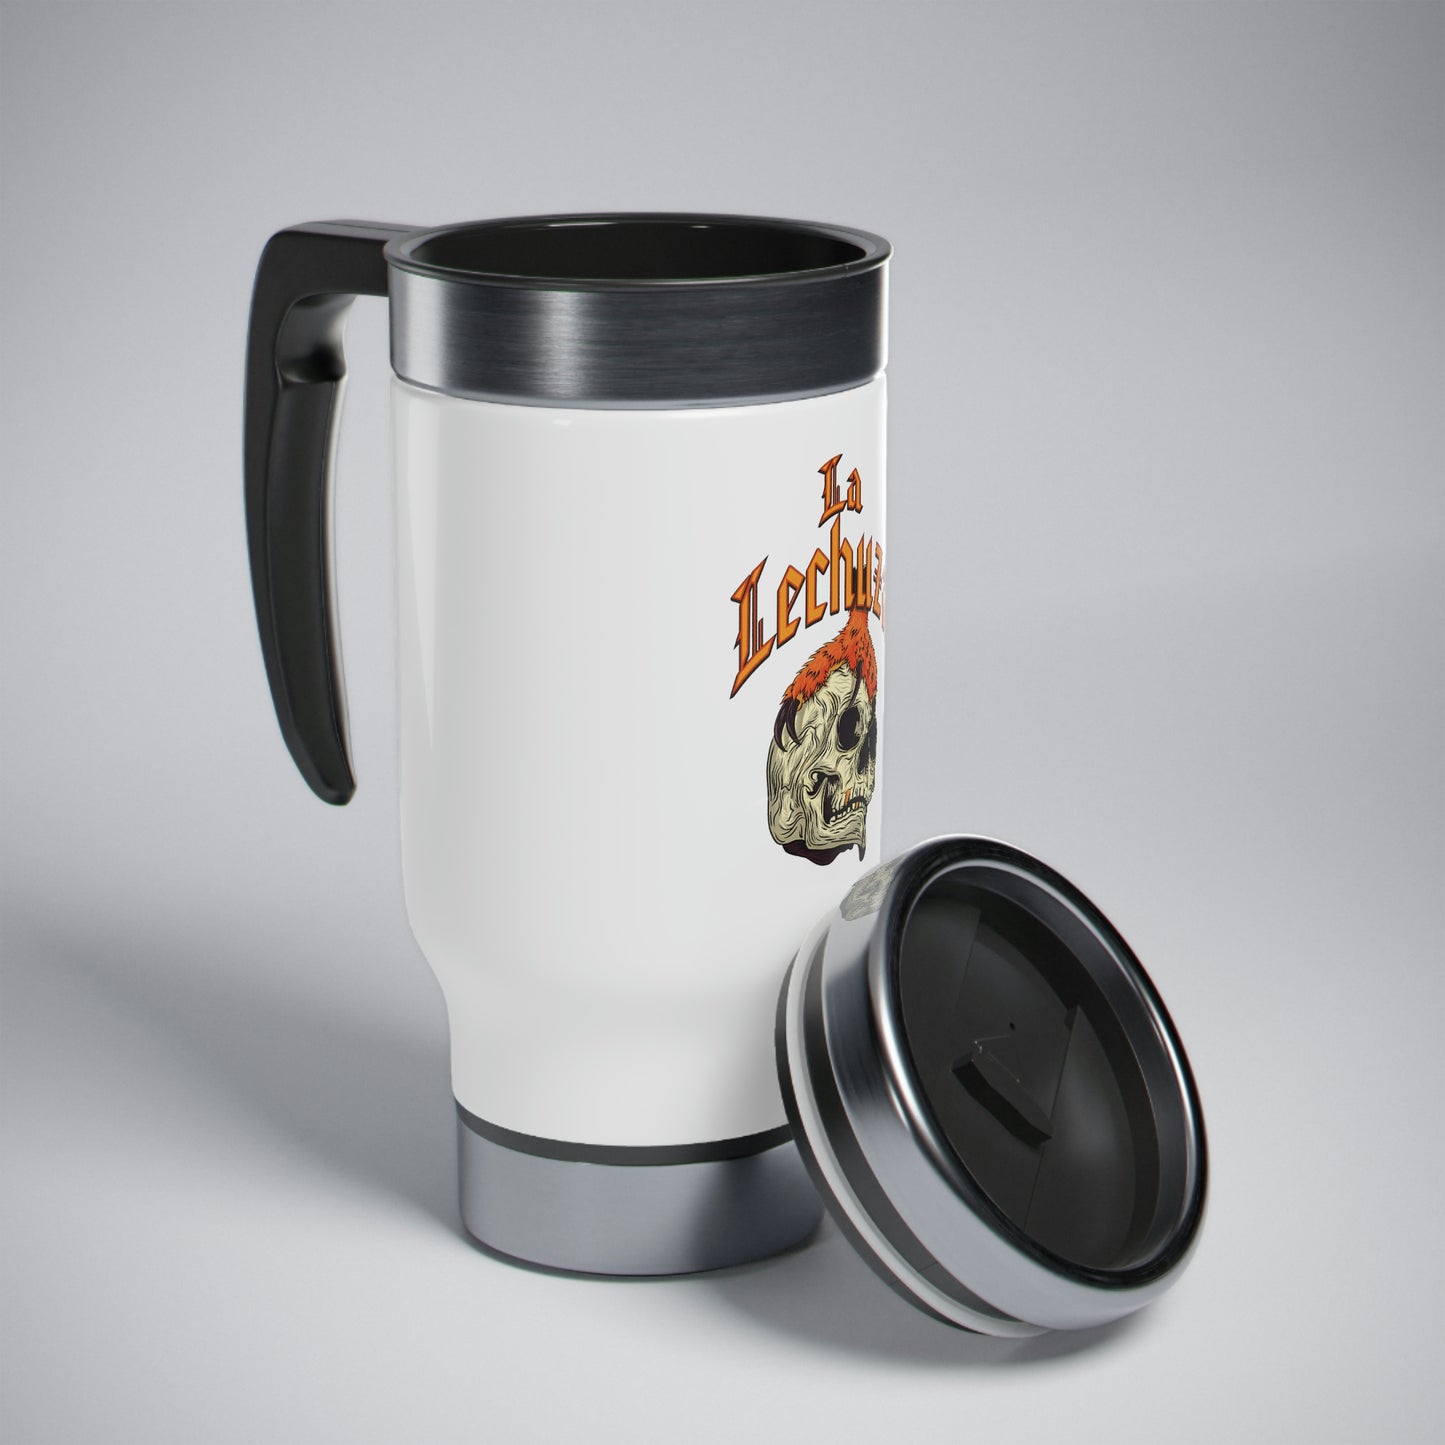 La Lechuza Stainless Steel Travel Mug with Handle, 14oz